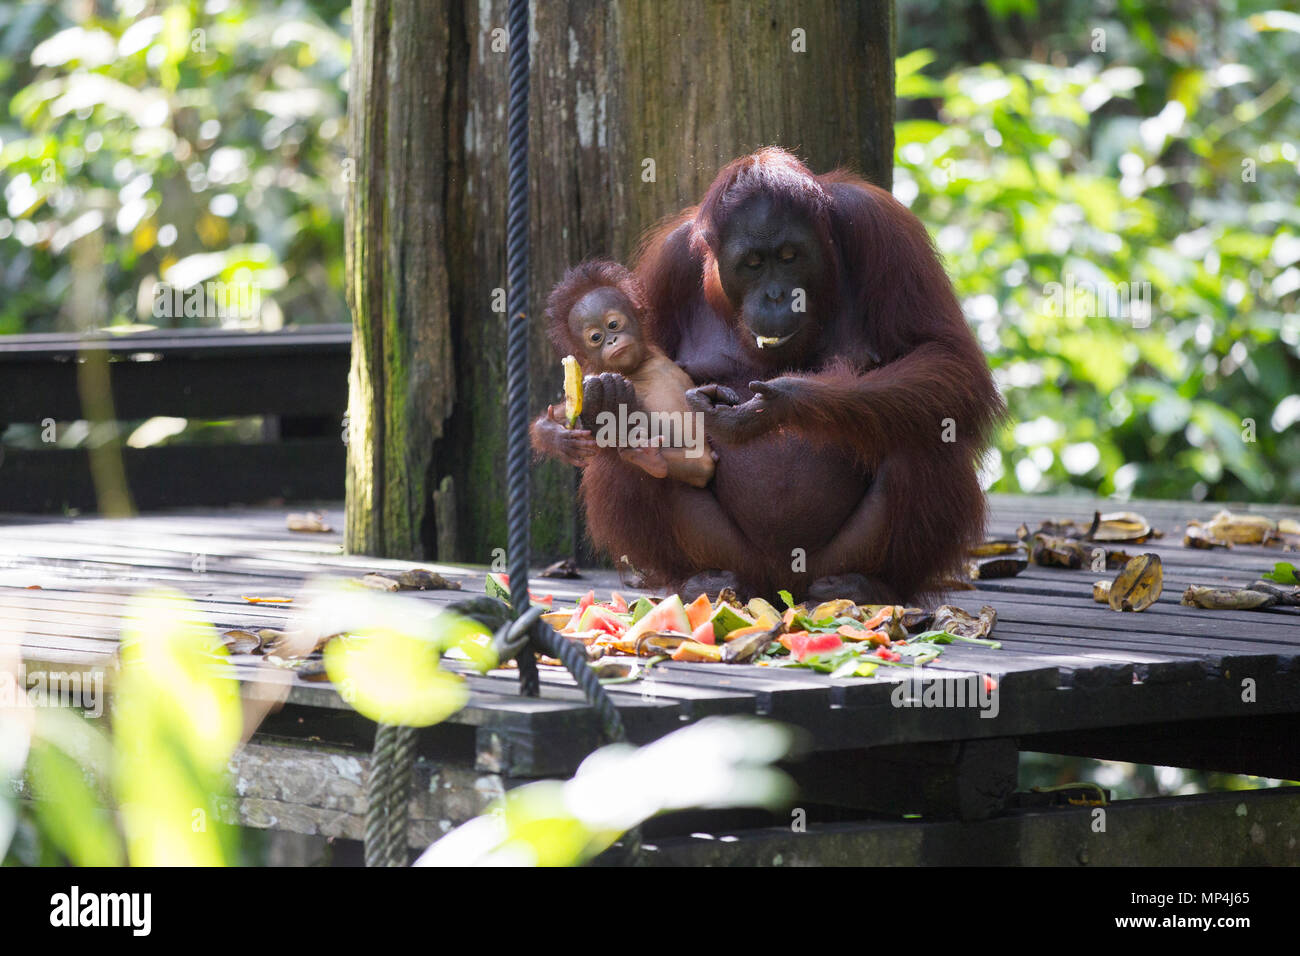 Orangutan's at the Sepilok Orangutan rehabilitation centre in the Malaysian state of Sabah on Borneo Island. Stock Photo